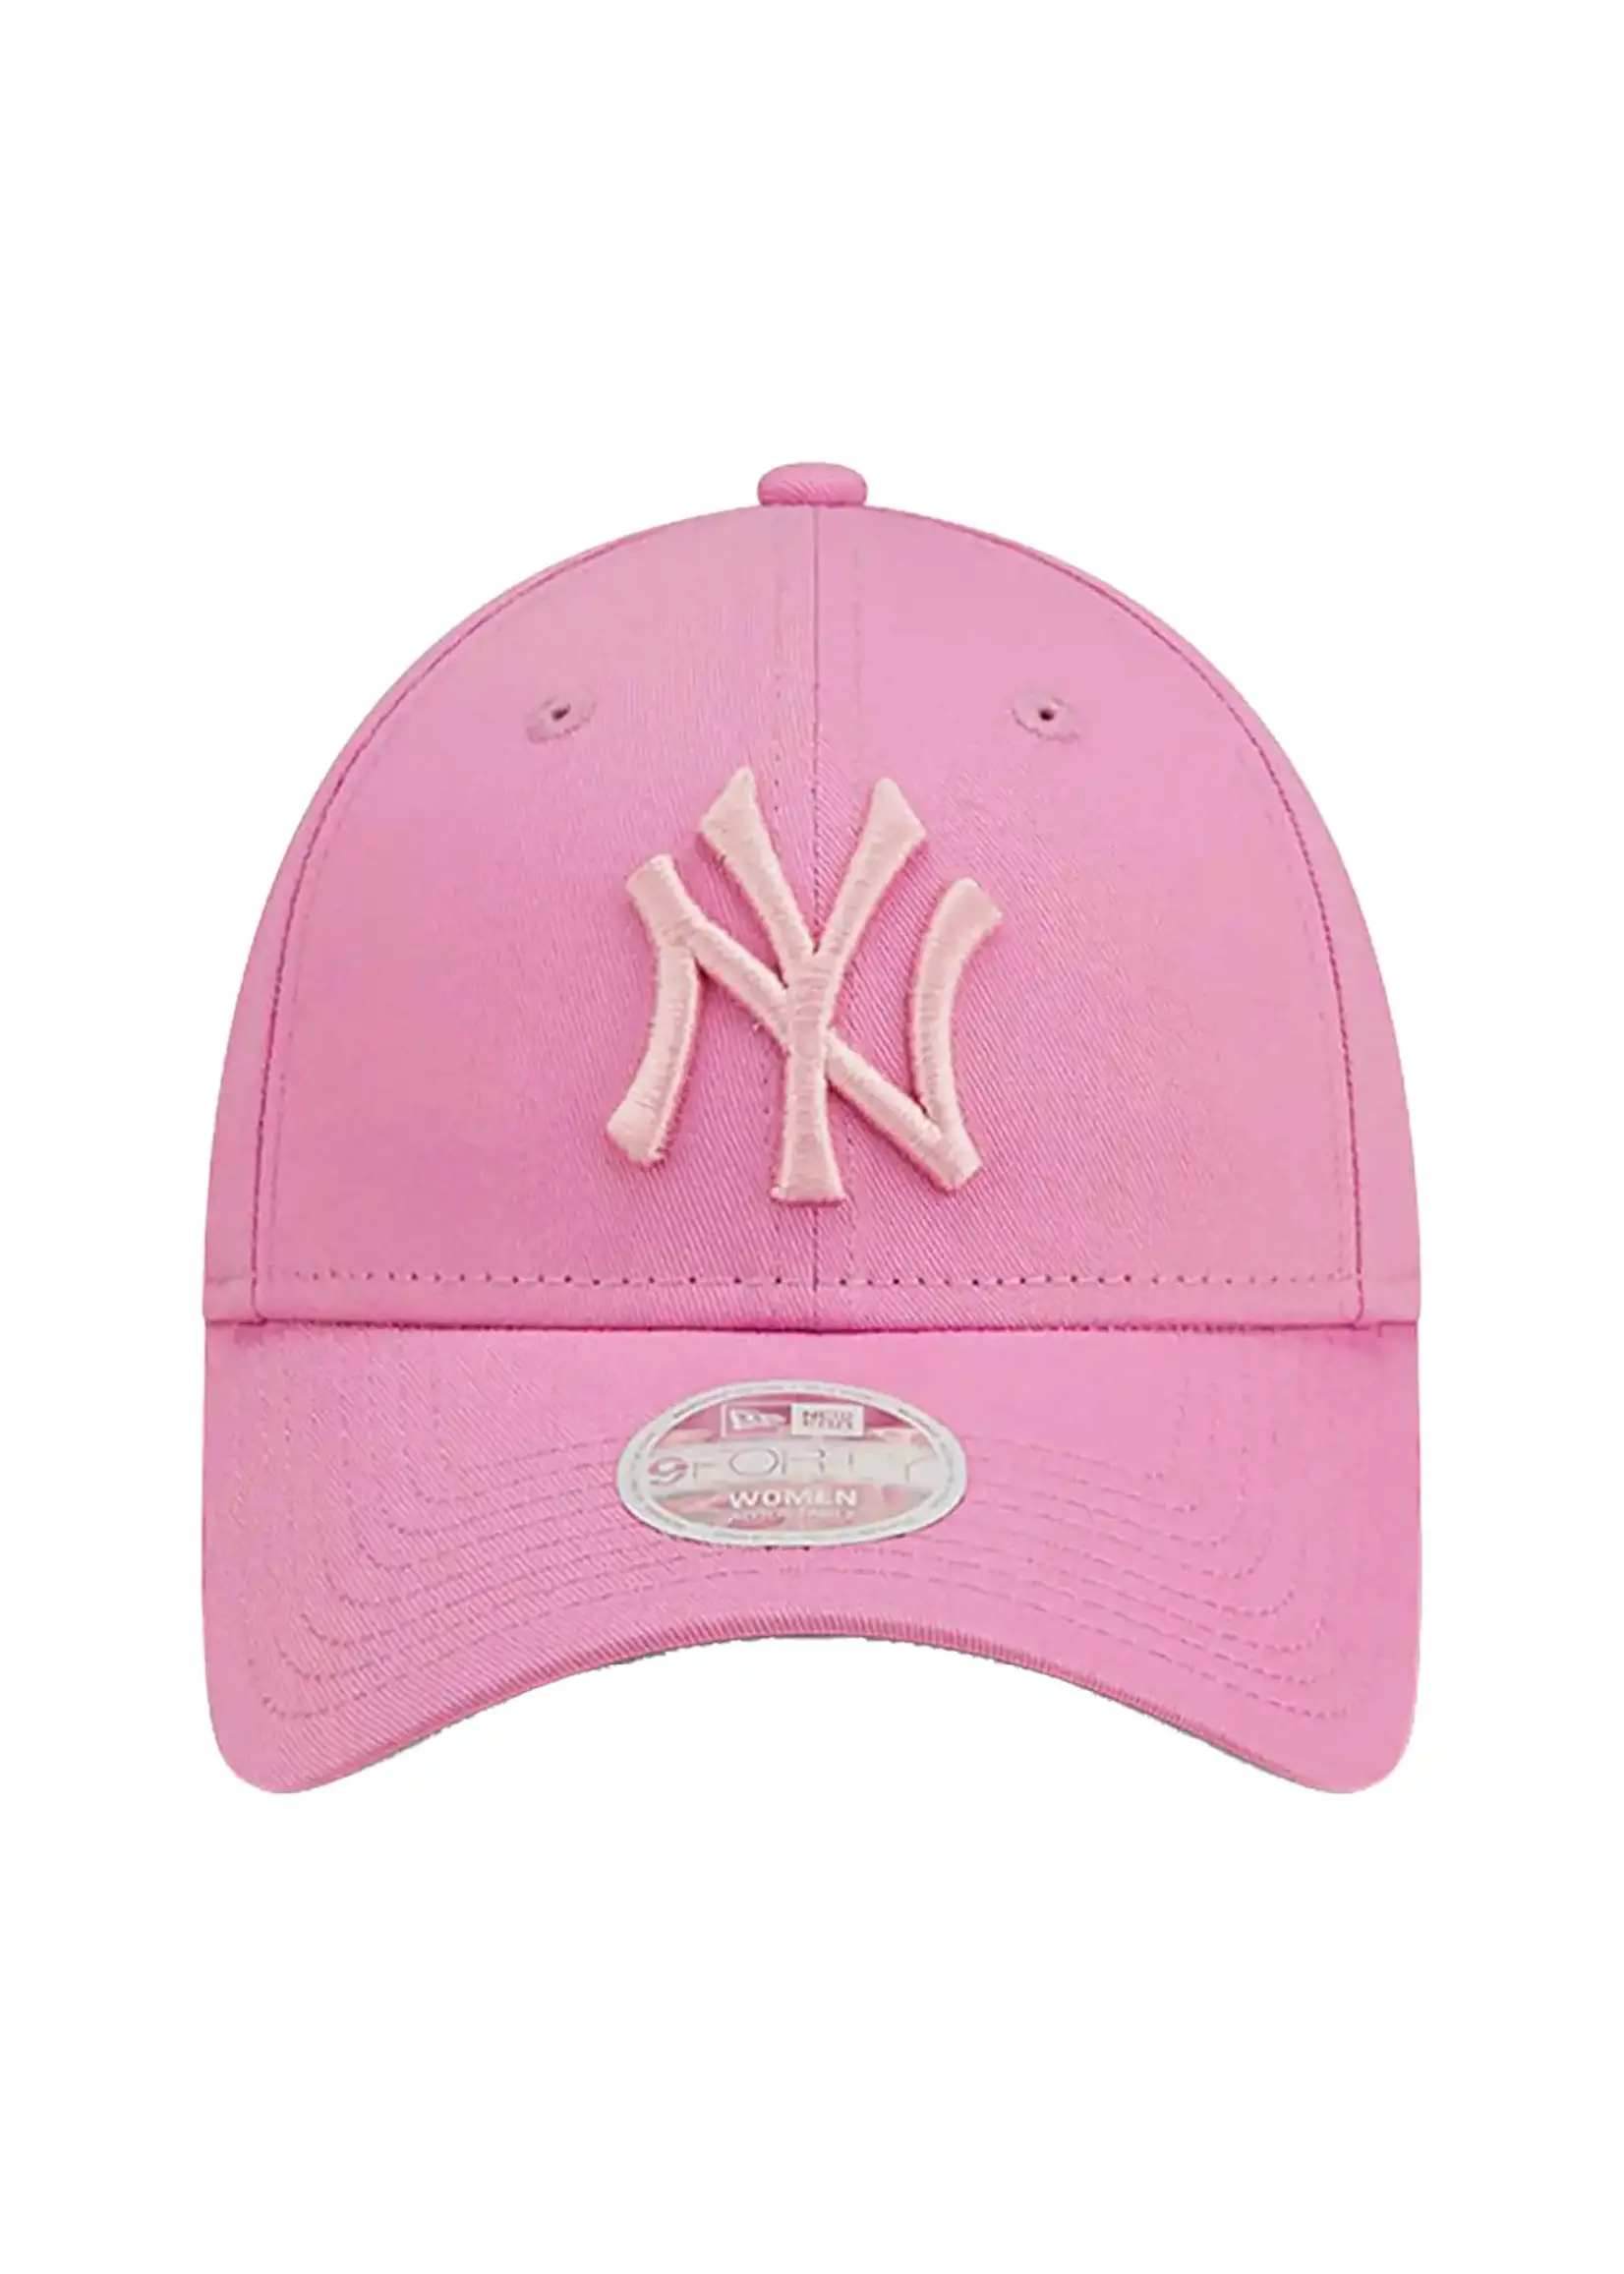 New Era New York Yankees Women 9Forty Cap Pink Pink